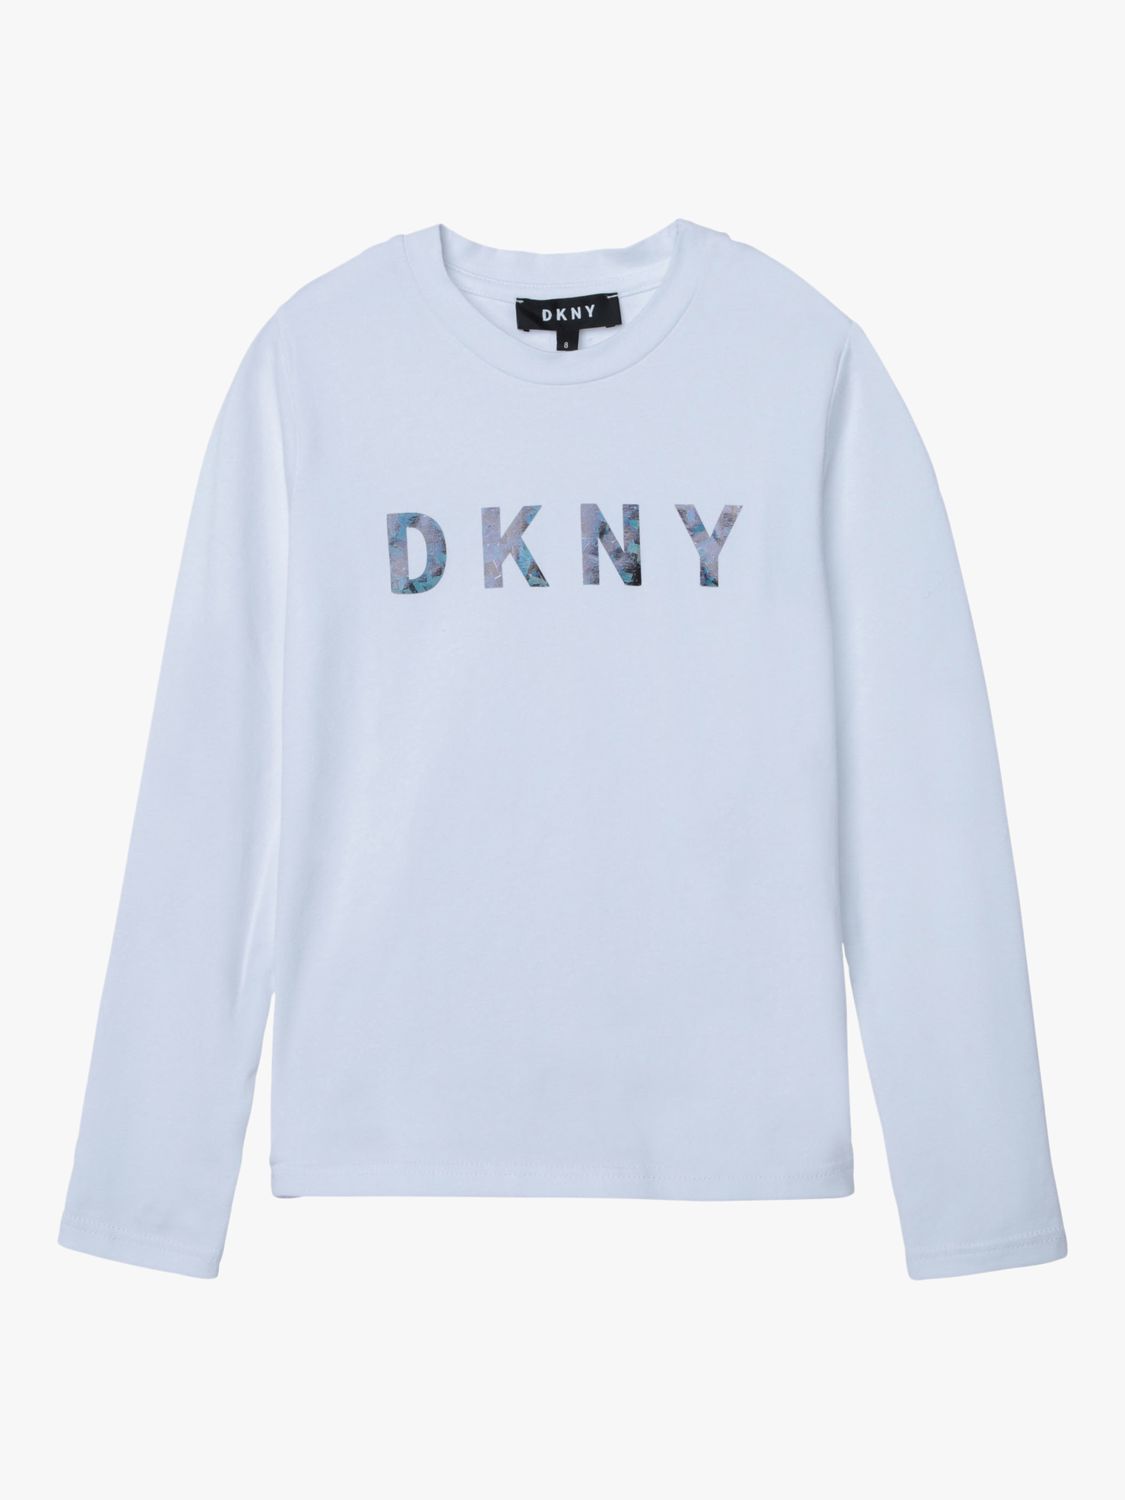 DKNY Girls' Cotton Jersey Logo T-Shirt, White